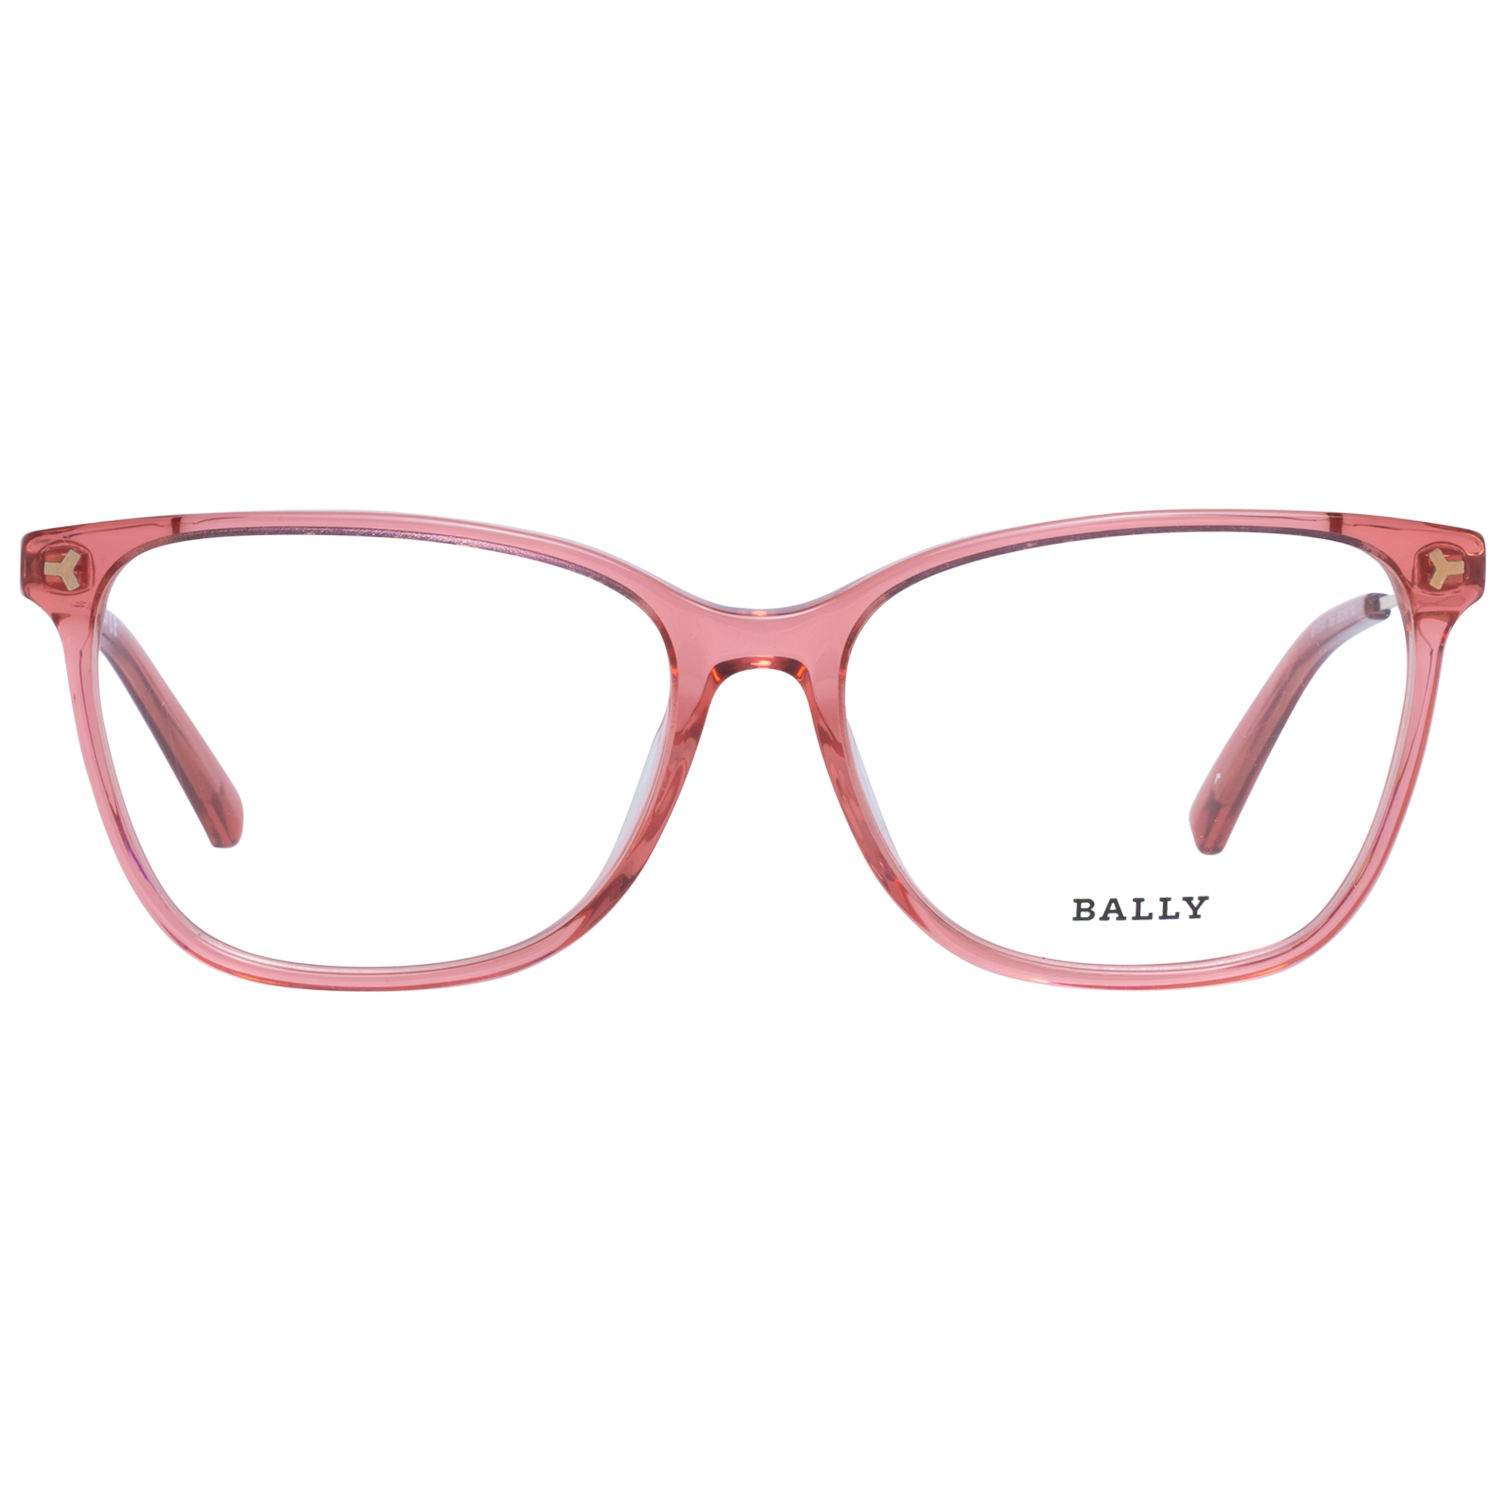 Bally Optical Frame Bally Eyeglasses Frames BY5041 066 55 Eyeglasses Eyewear UK USA Australia 